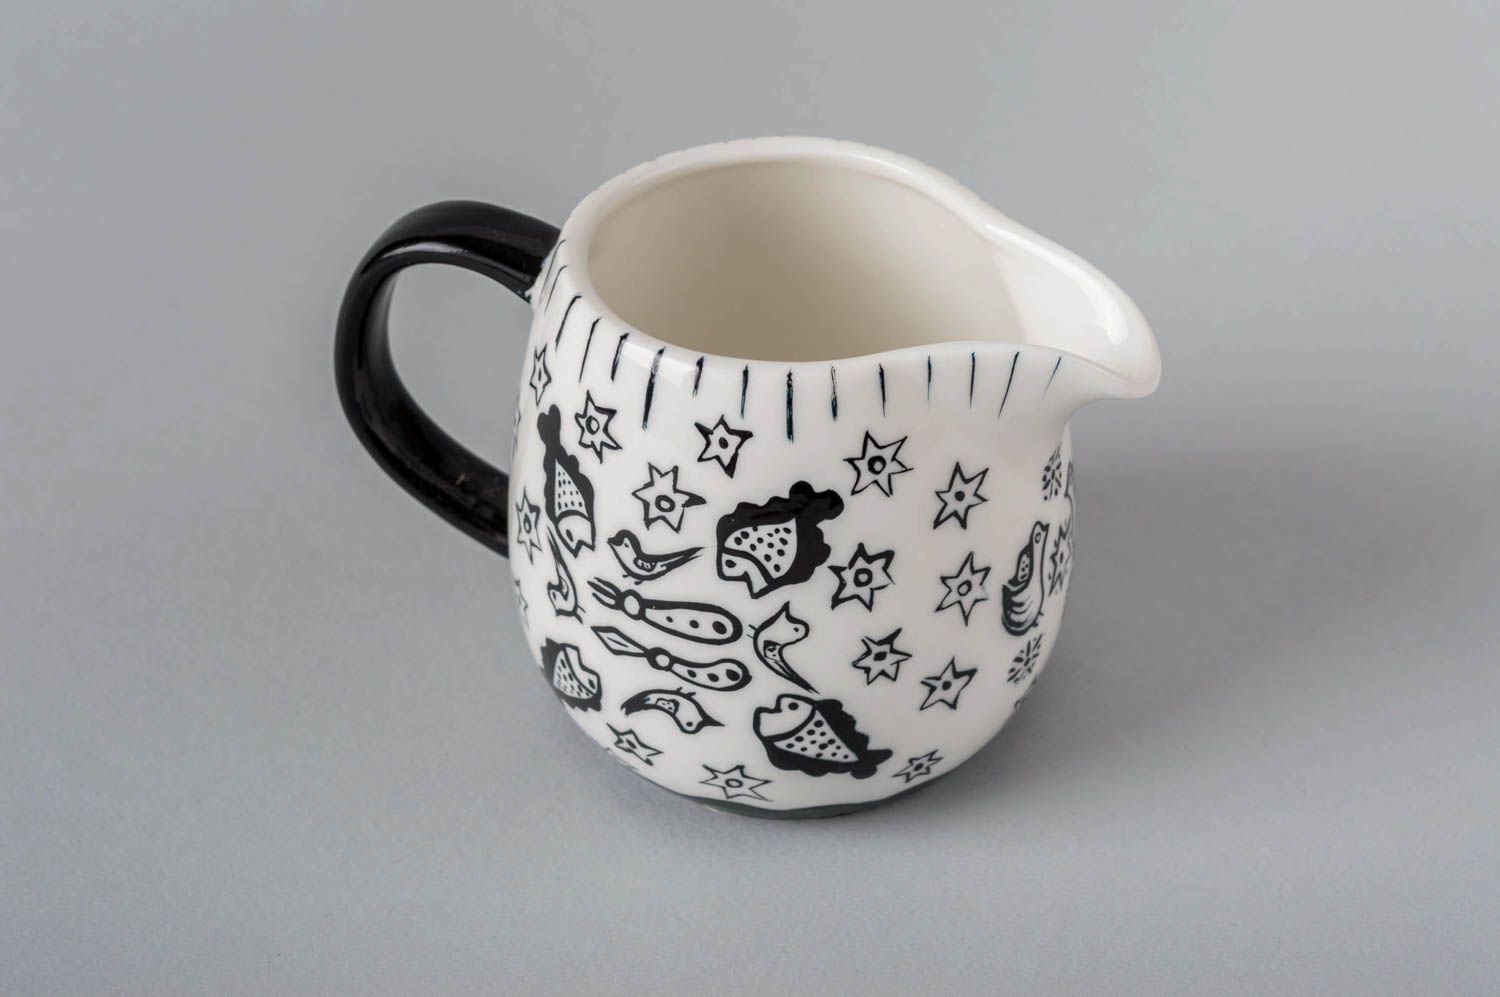 12 oz ceramic porcelain creamer jug in white and black color with fish design 0,4 lb photo 3